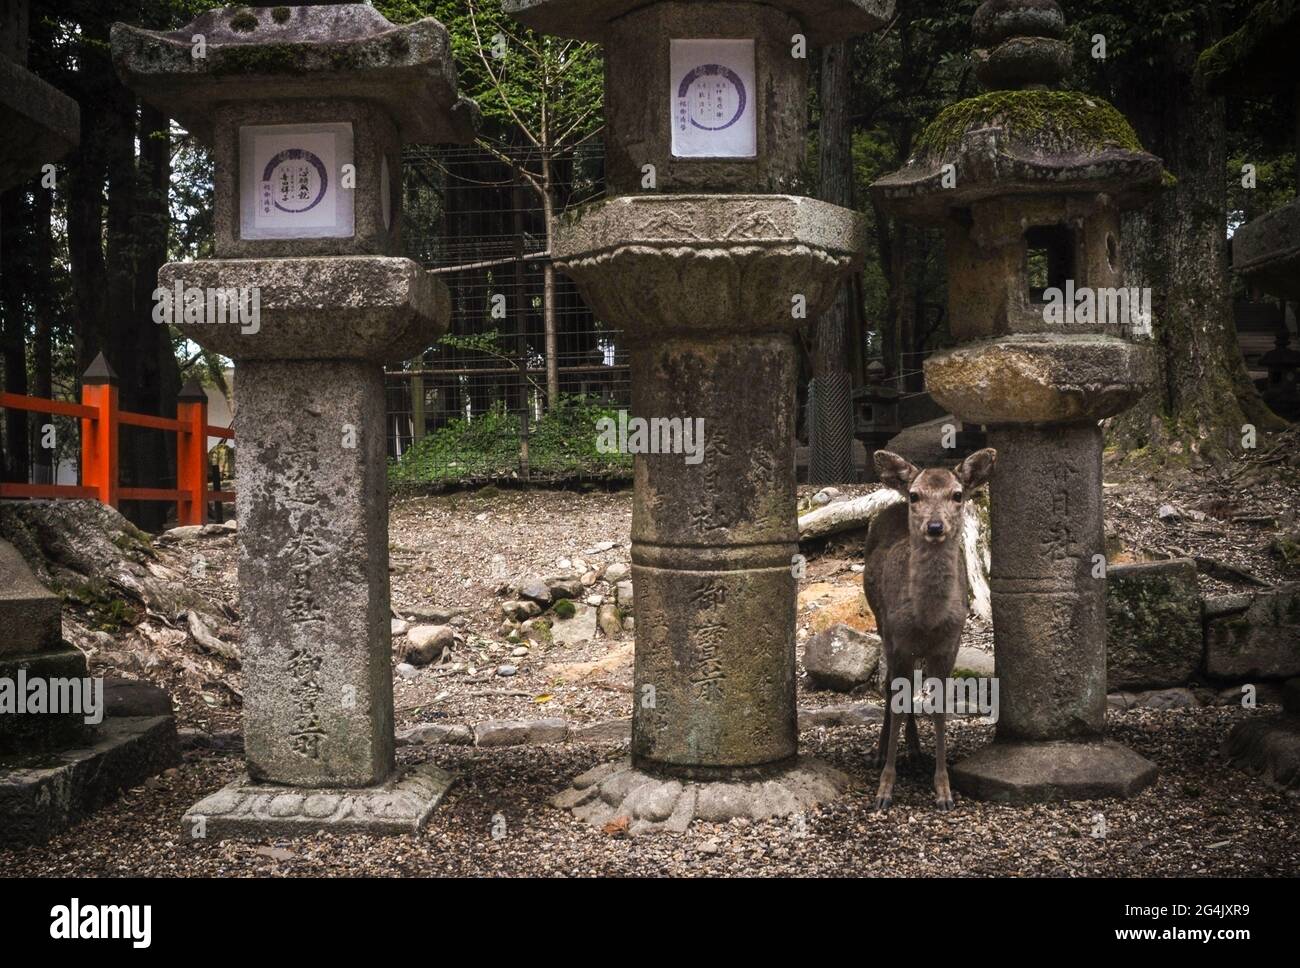 Deer standing between japanese outdoor lanterns in Nara park, Nara, Japan Stock Photo